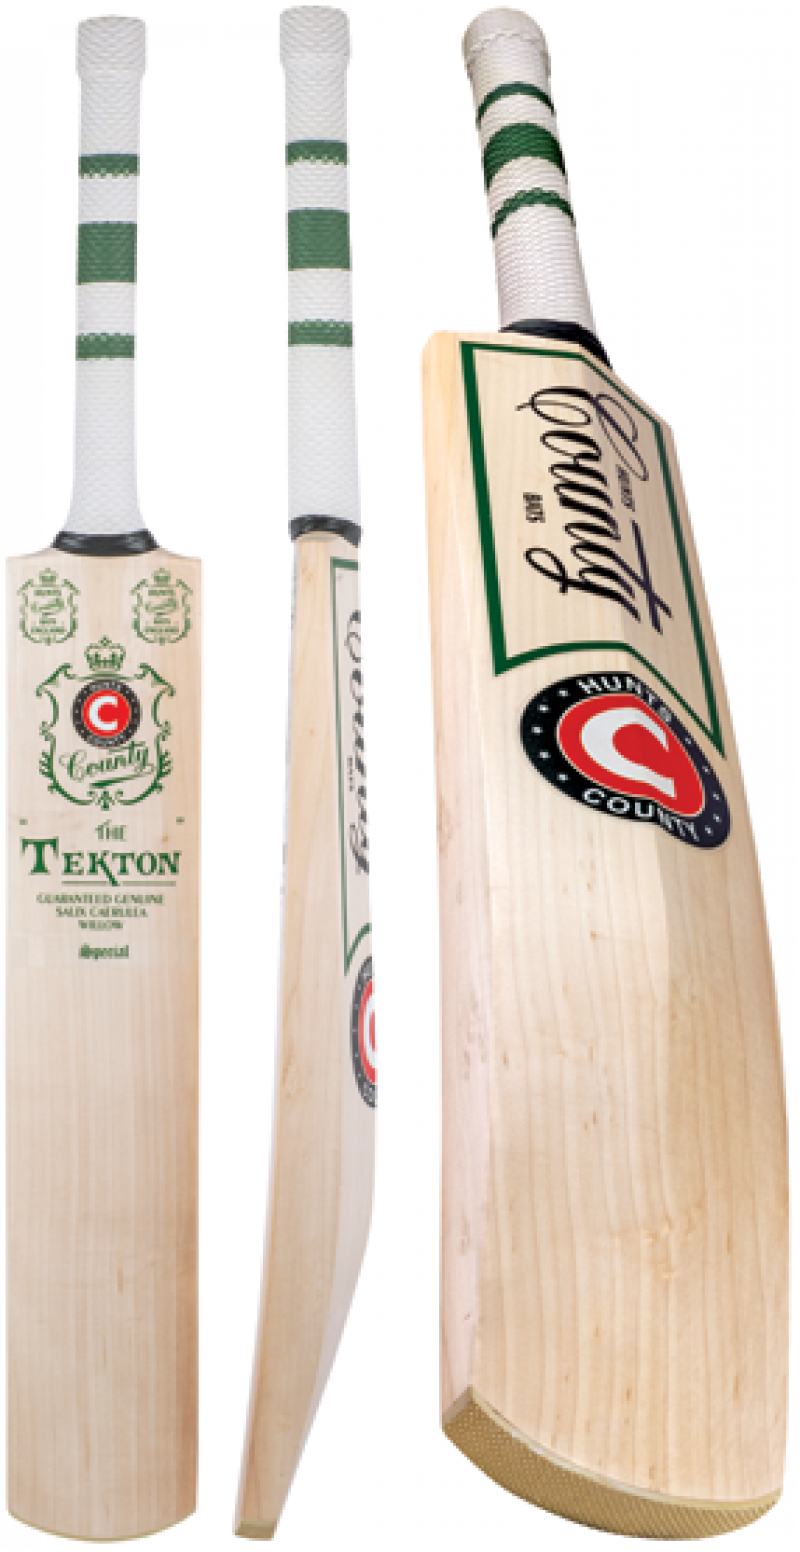 Hunts County Tekton 100 Junior Cricket Bat (Kashmir Willow)